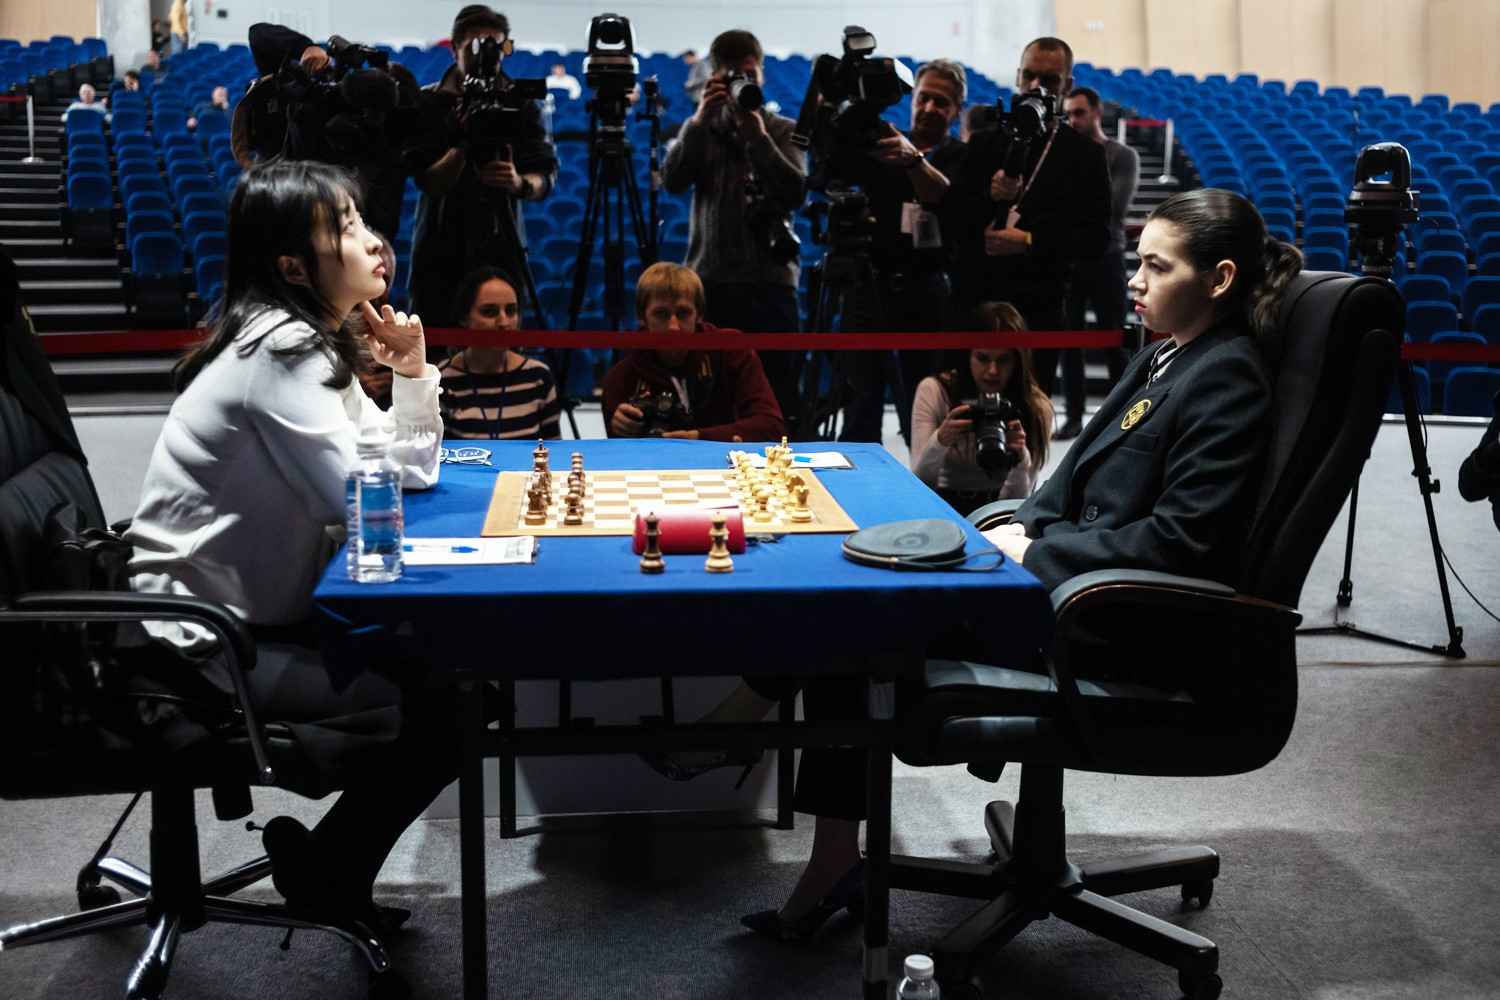 Goryachkina wins to send Women's World Chess Championship to tiebreaks